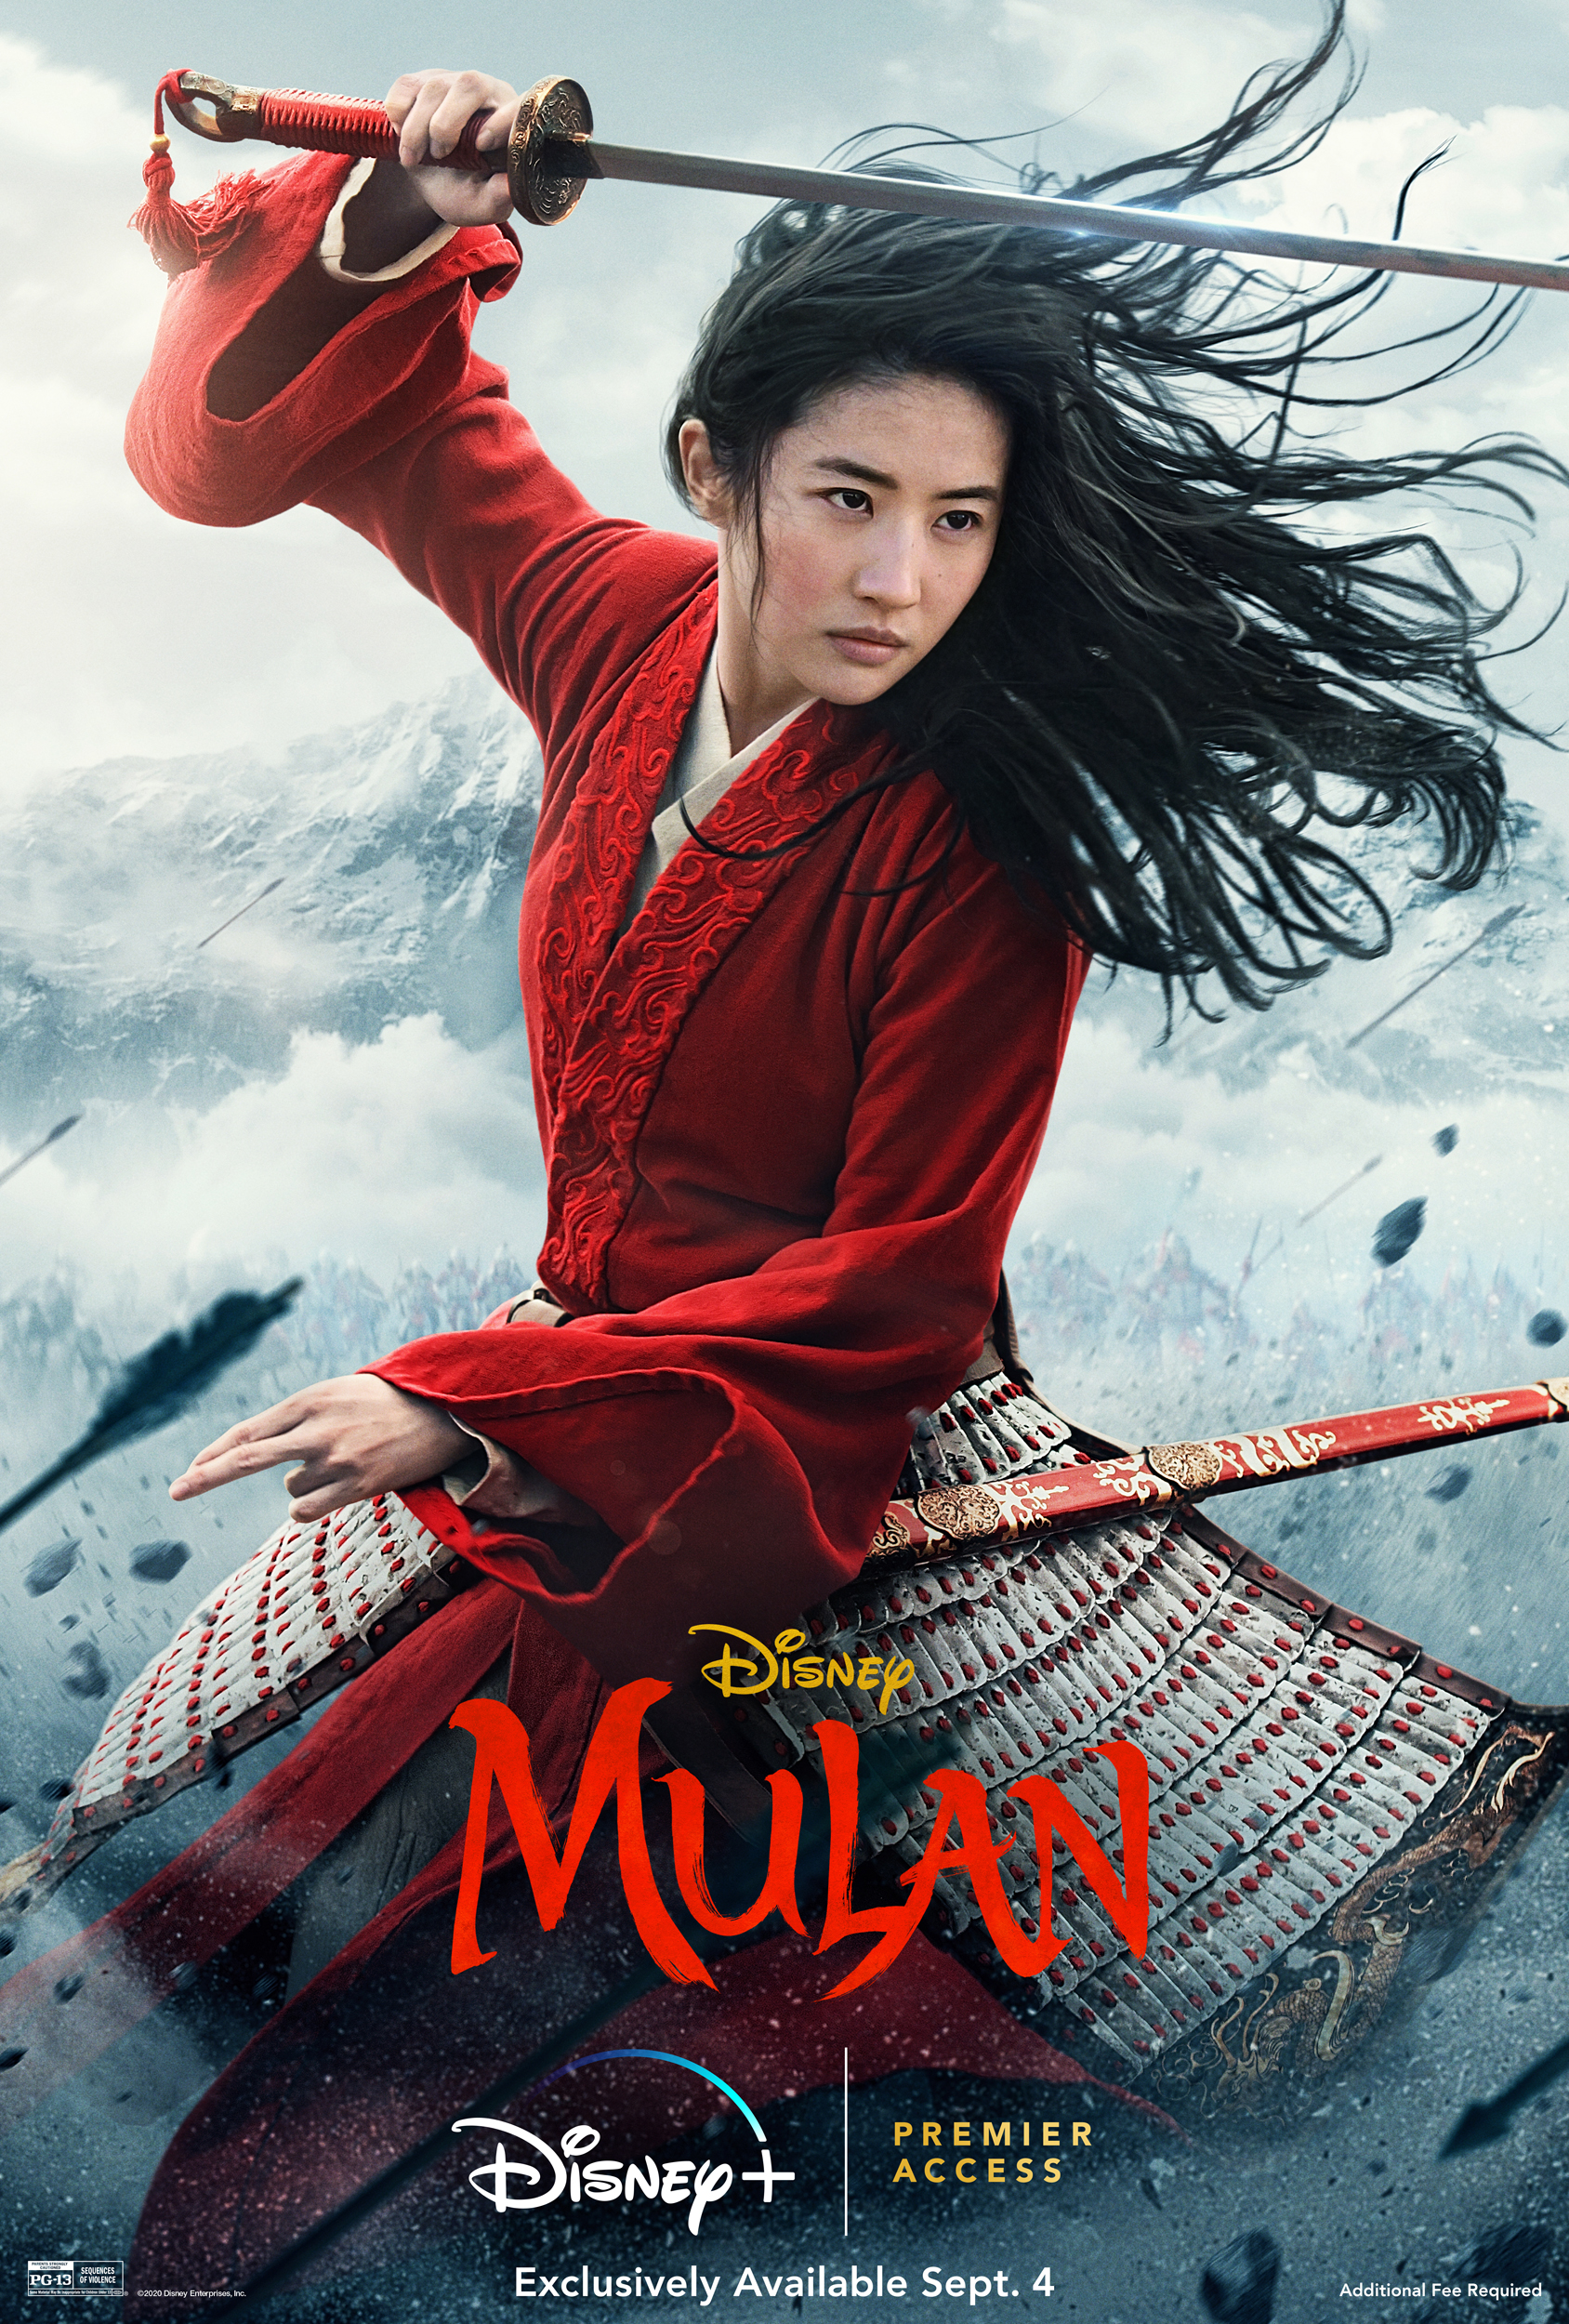 Stiahni si Filmy CZ/SK dabing Mulan (2020)(SK)[1080p] = CSFD 57%